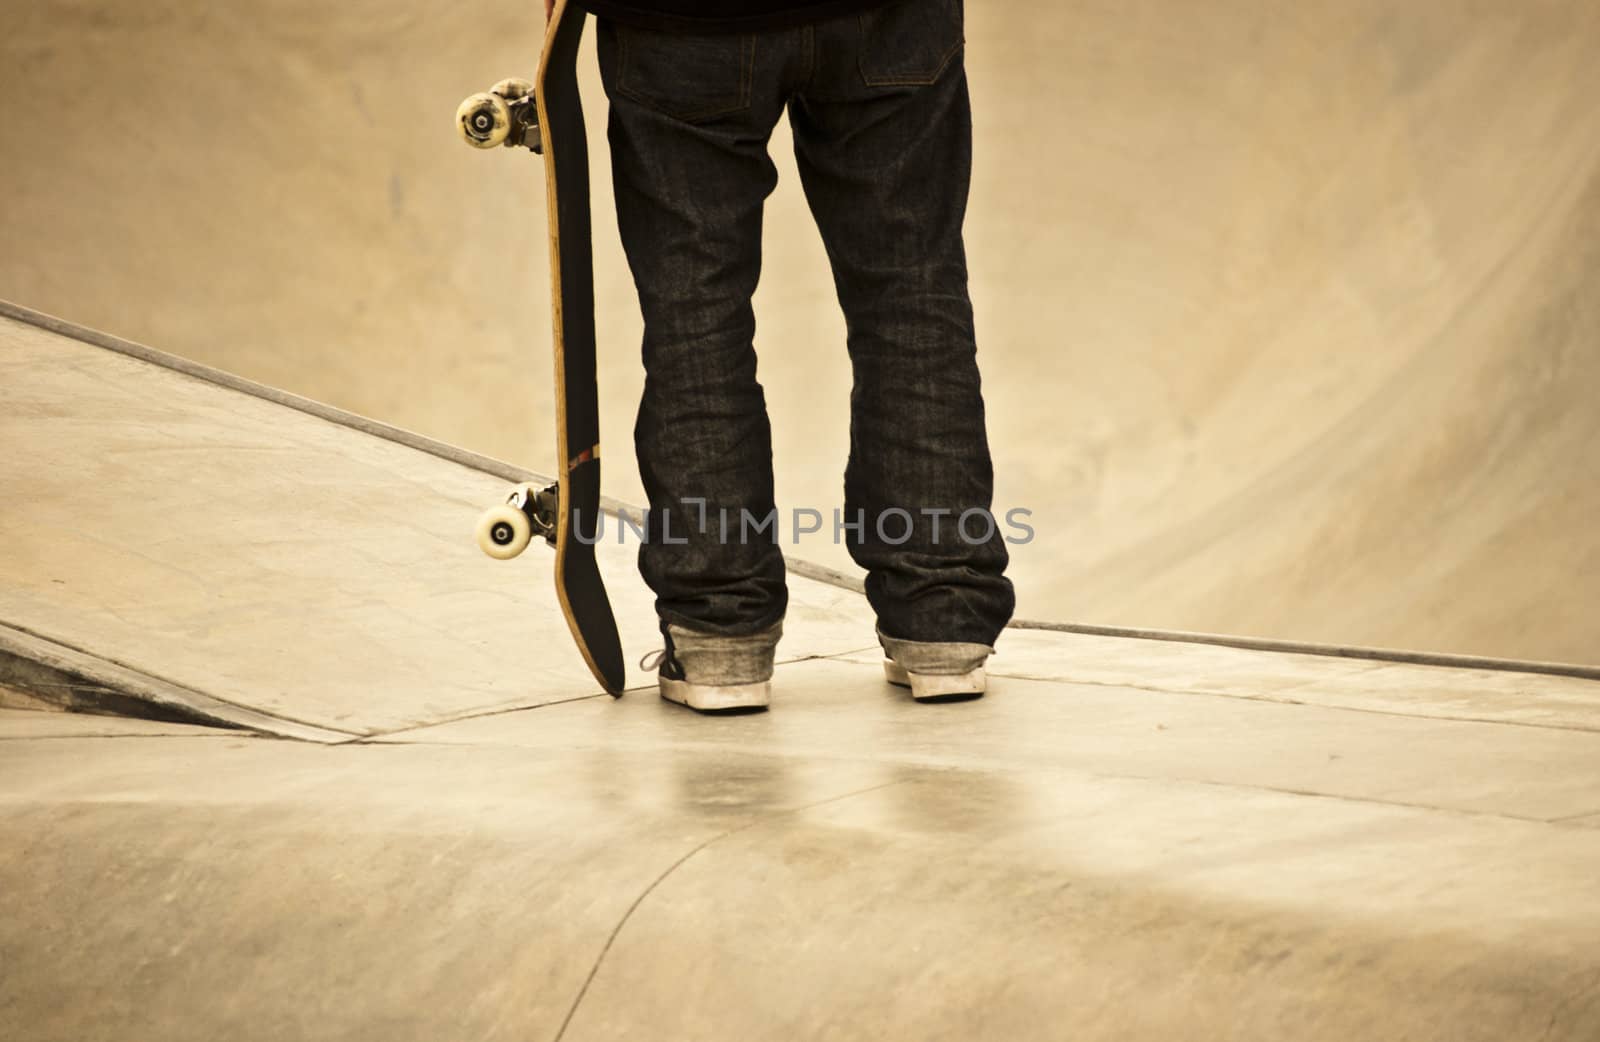 Teenager holding his skateboard at local skatepark